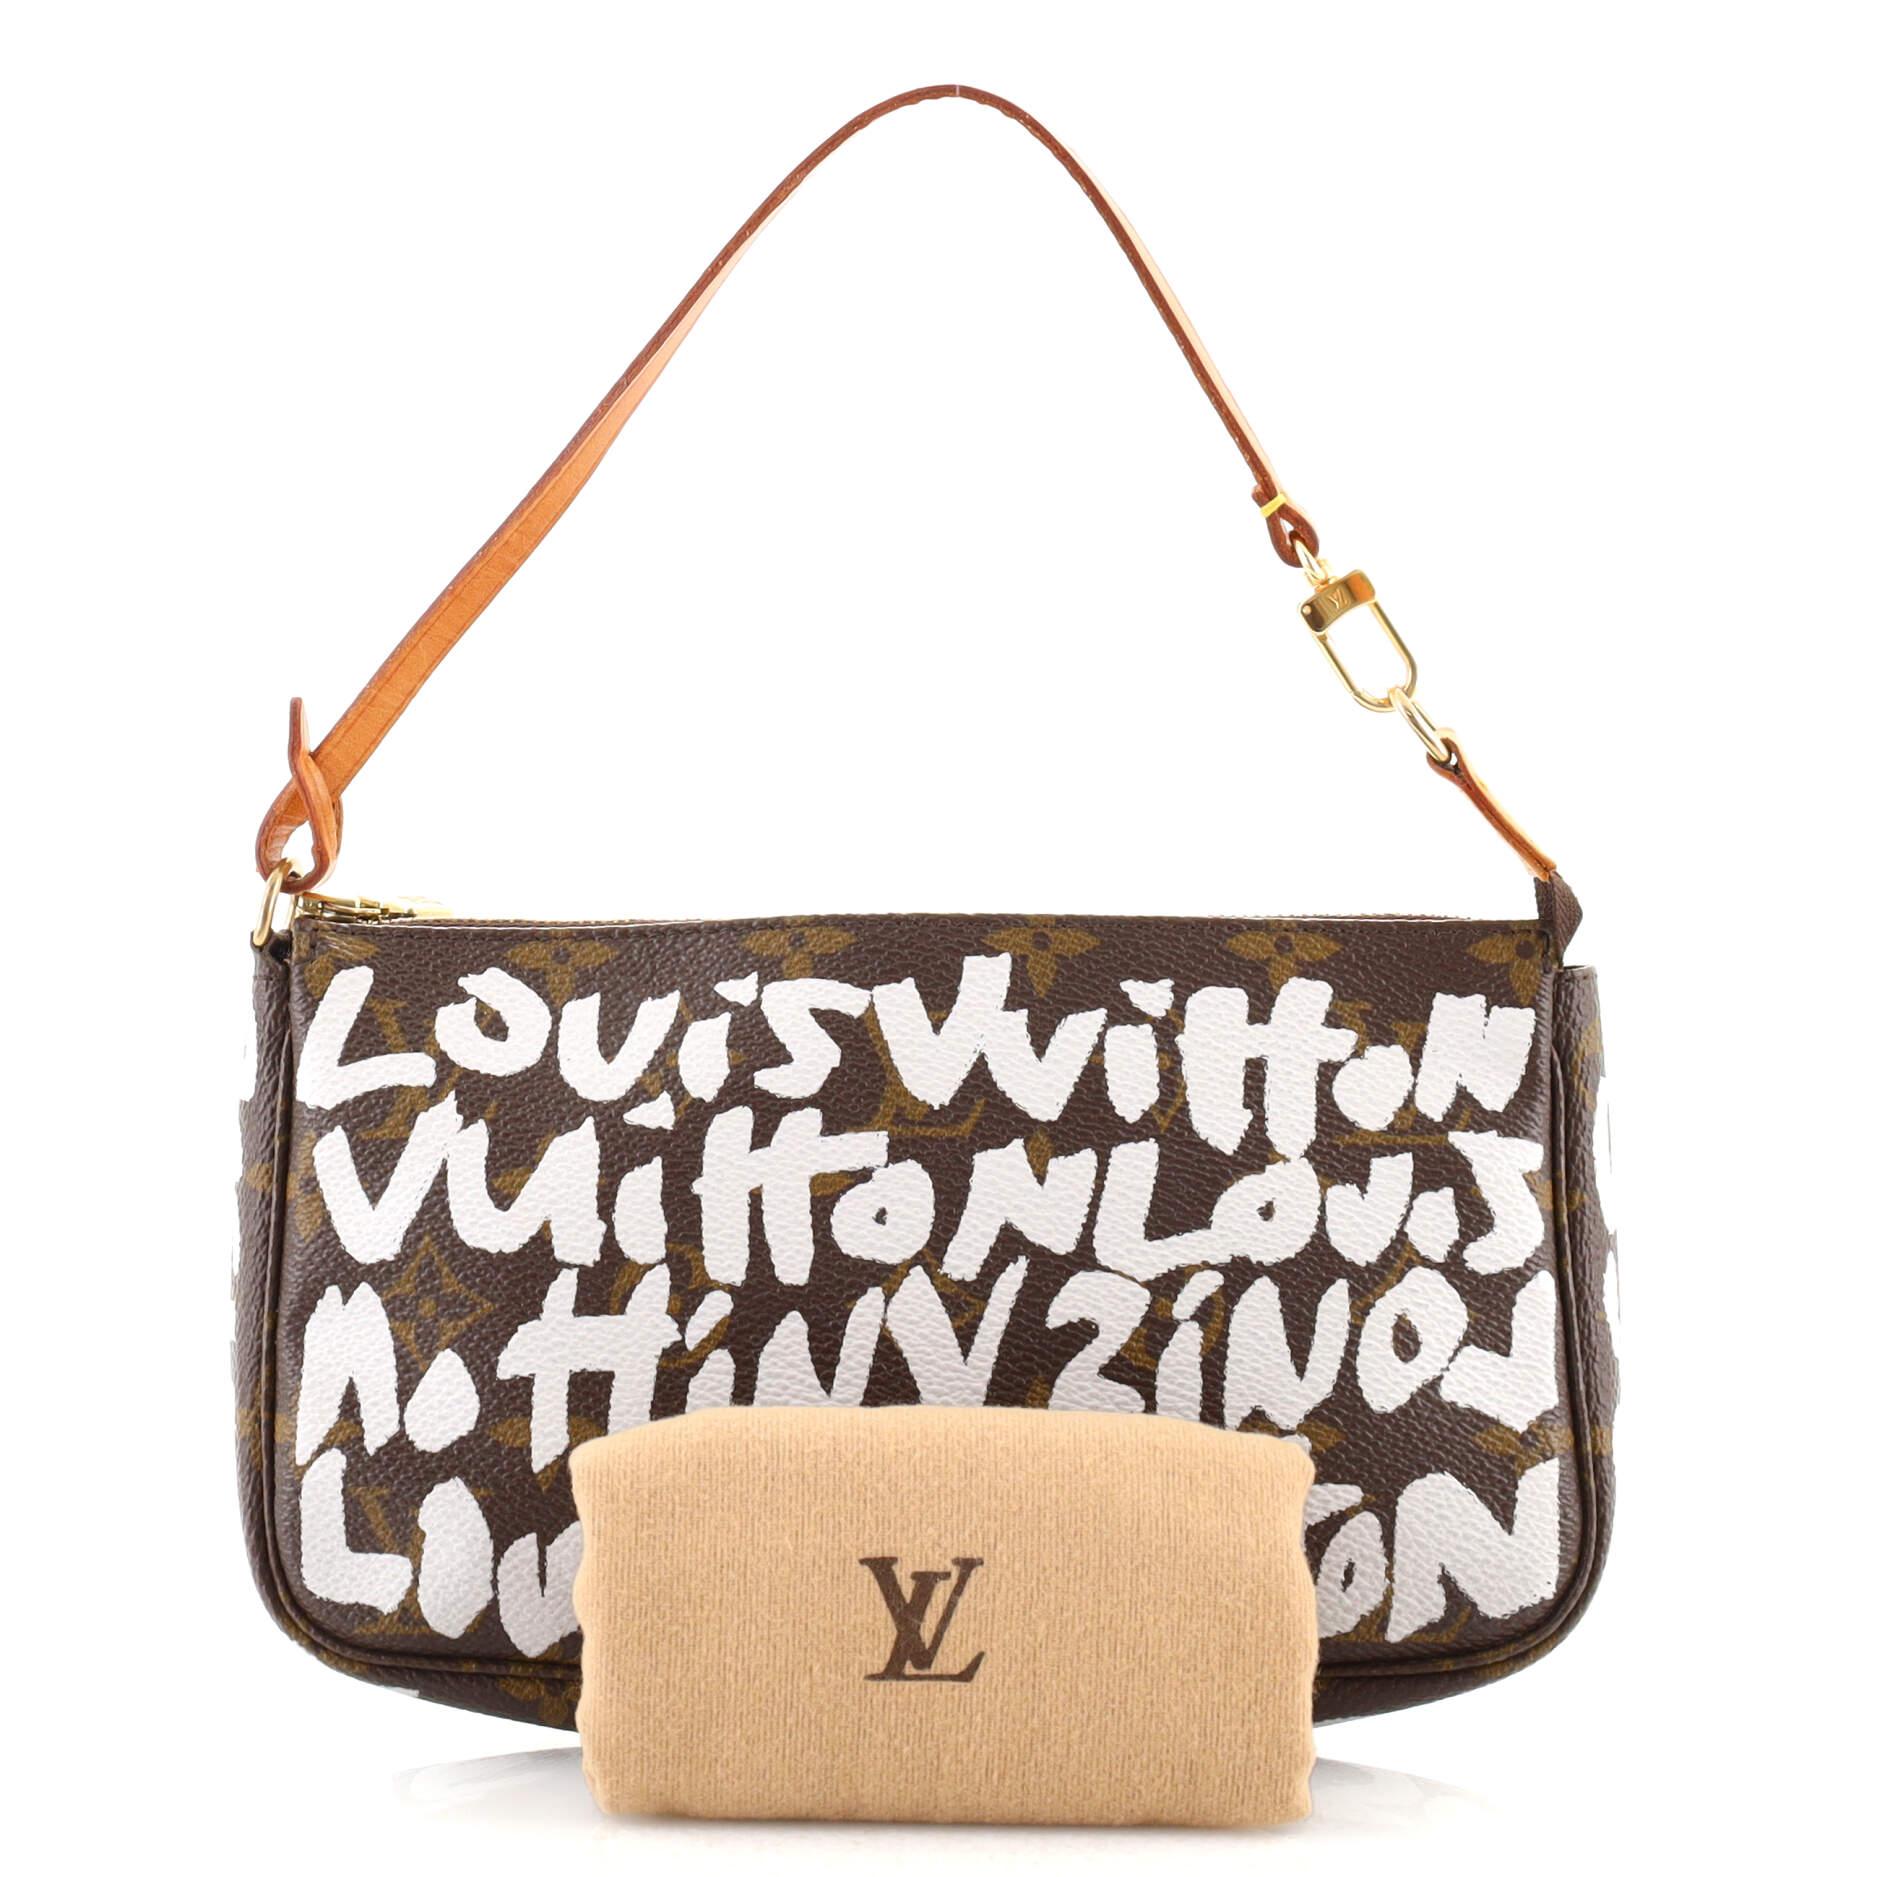 LOUIS VUITTON Graffiti Pochette Accessoire Shoulder Bag In Brown - Peach